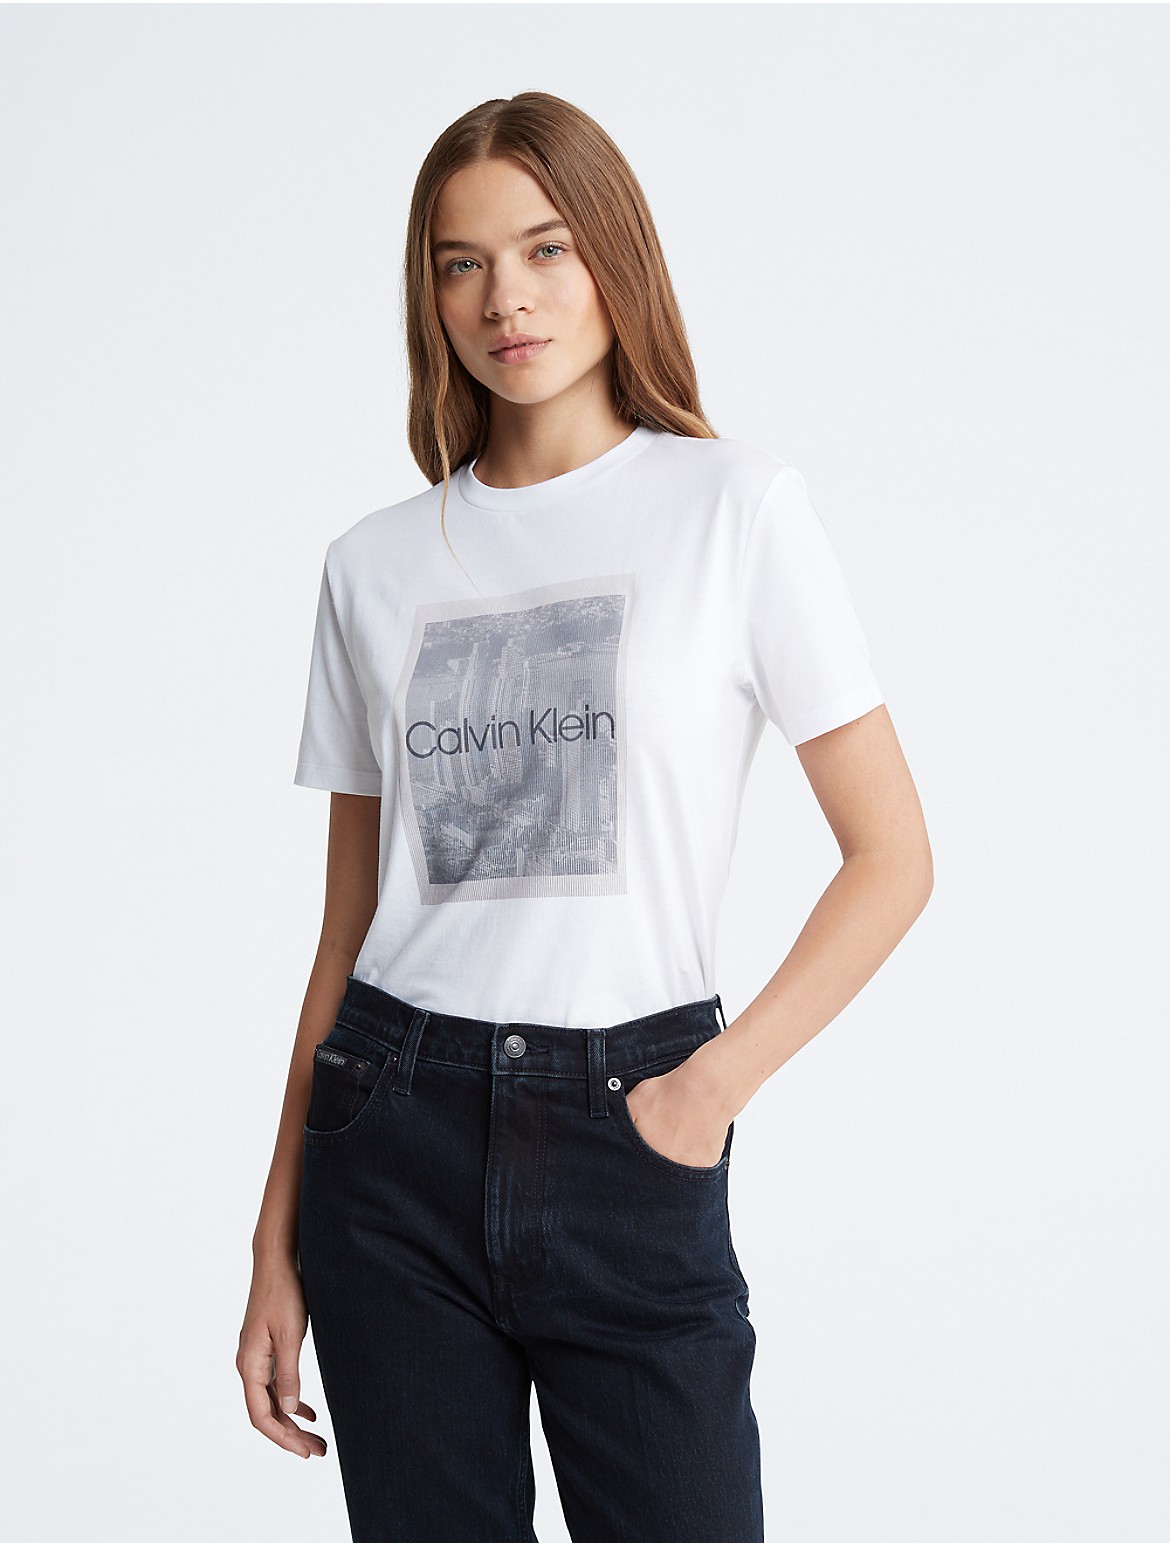 Calvin Klein Women's City Graphic Crewneck T-Shirt - White - L